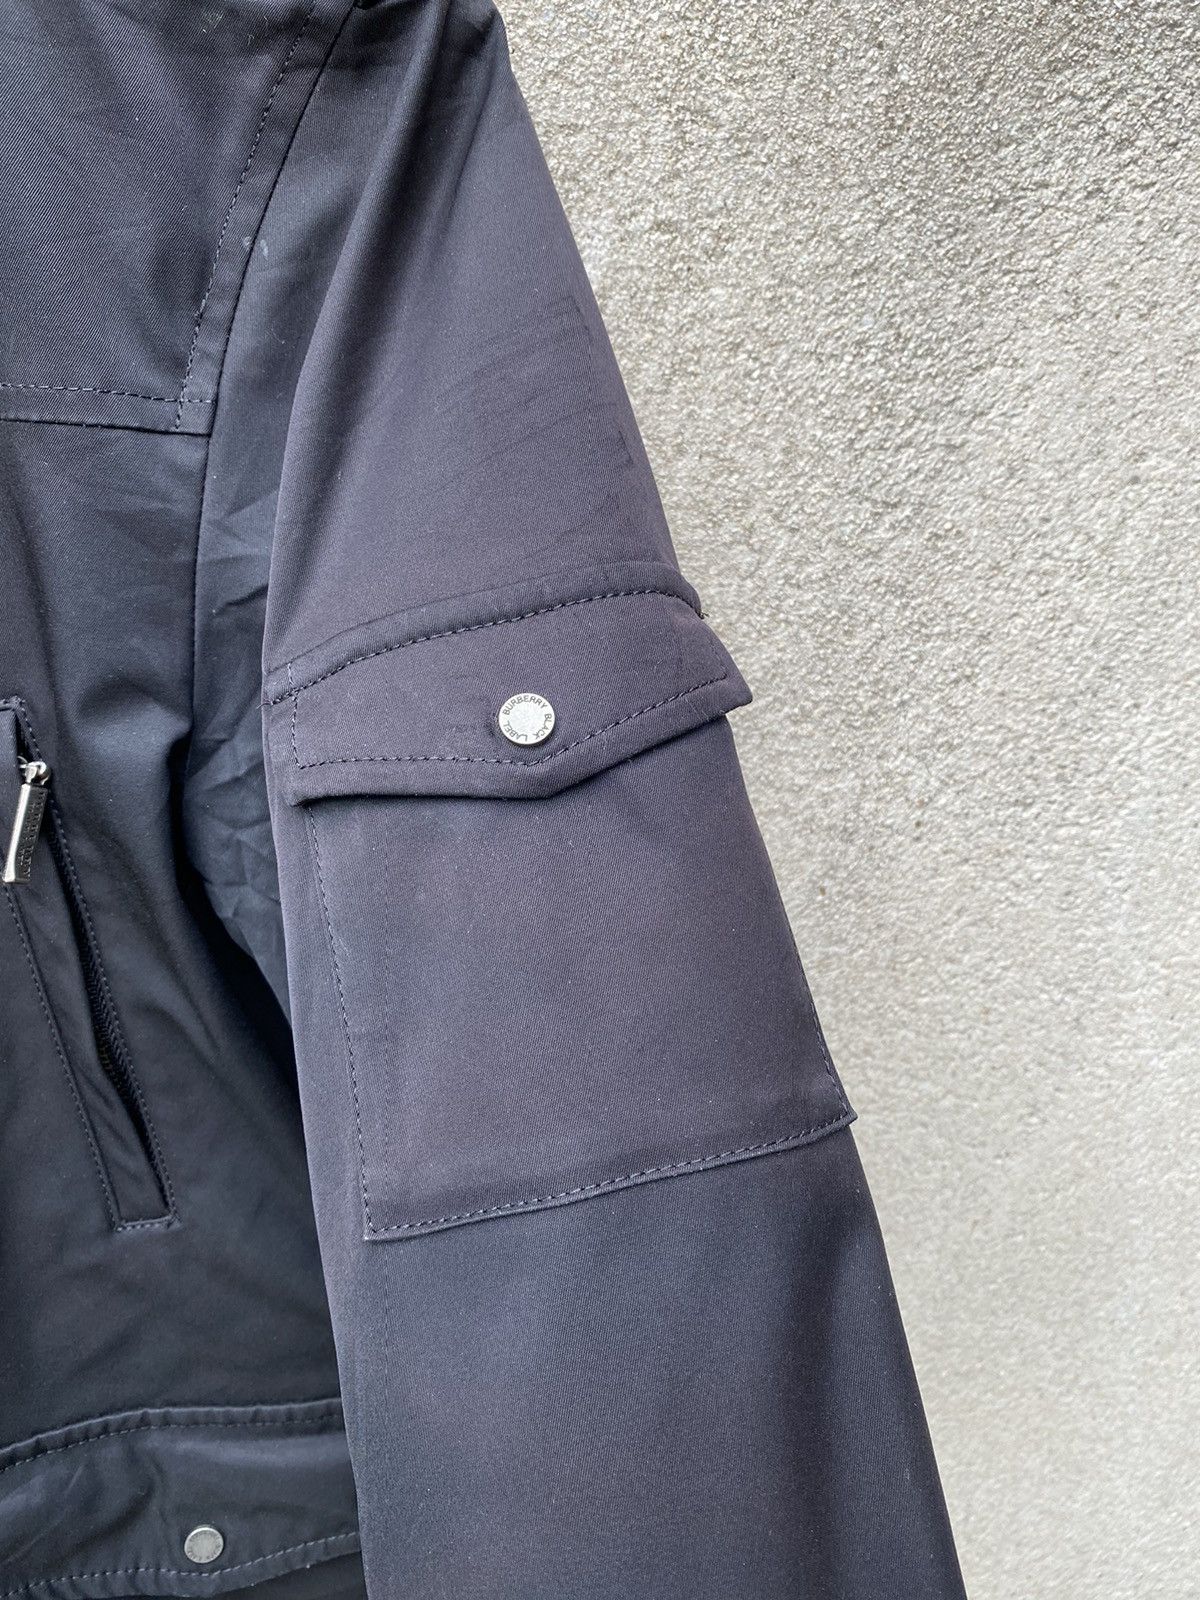 Burberry Nova Check Duffle Coat Made In Japan - 5